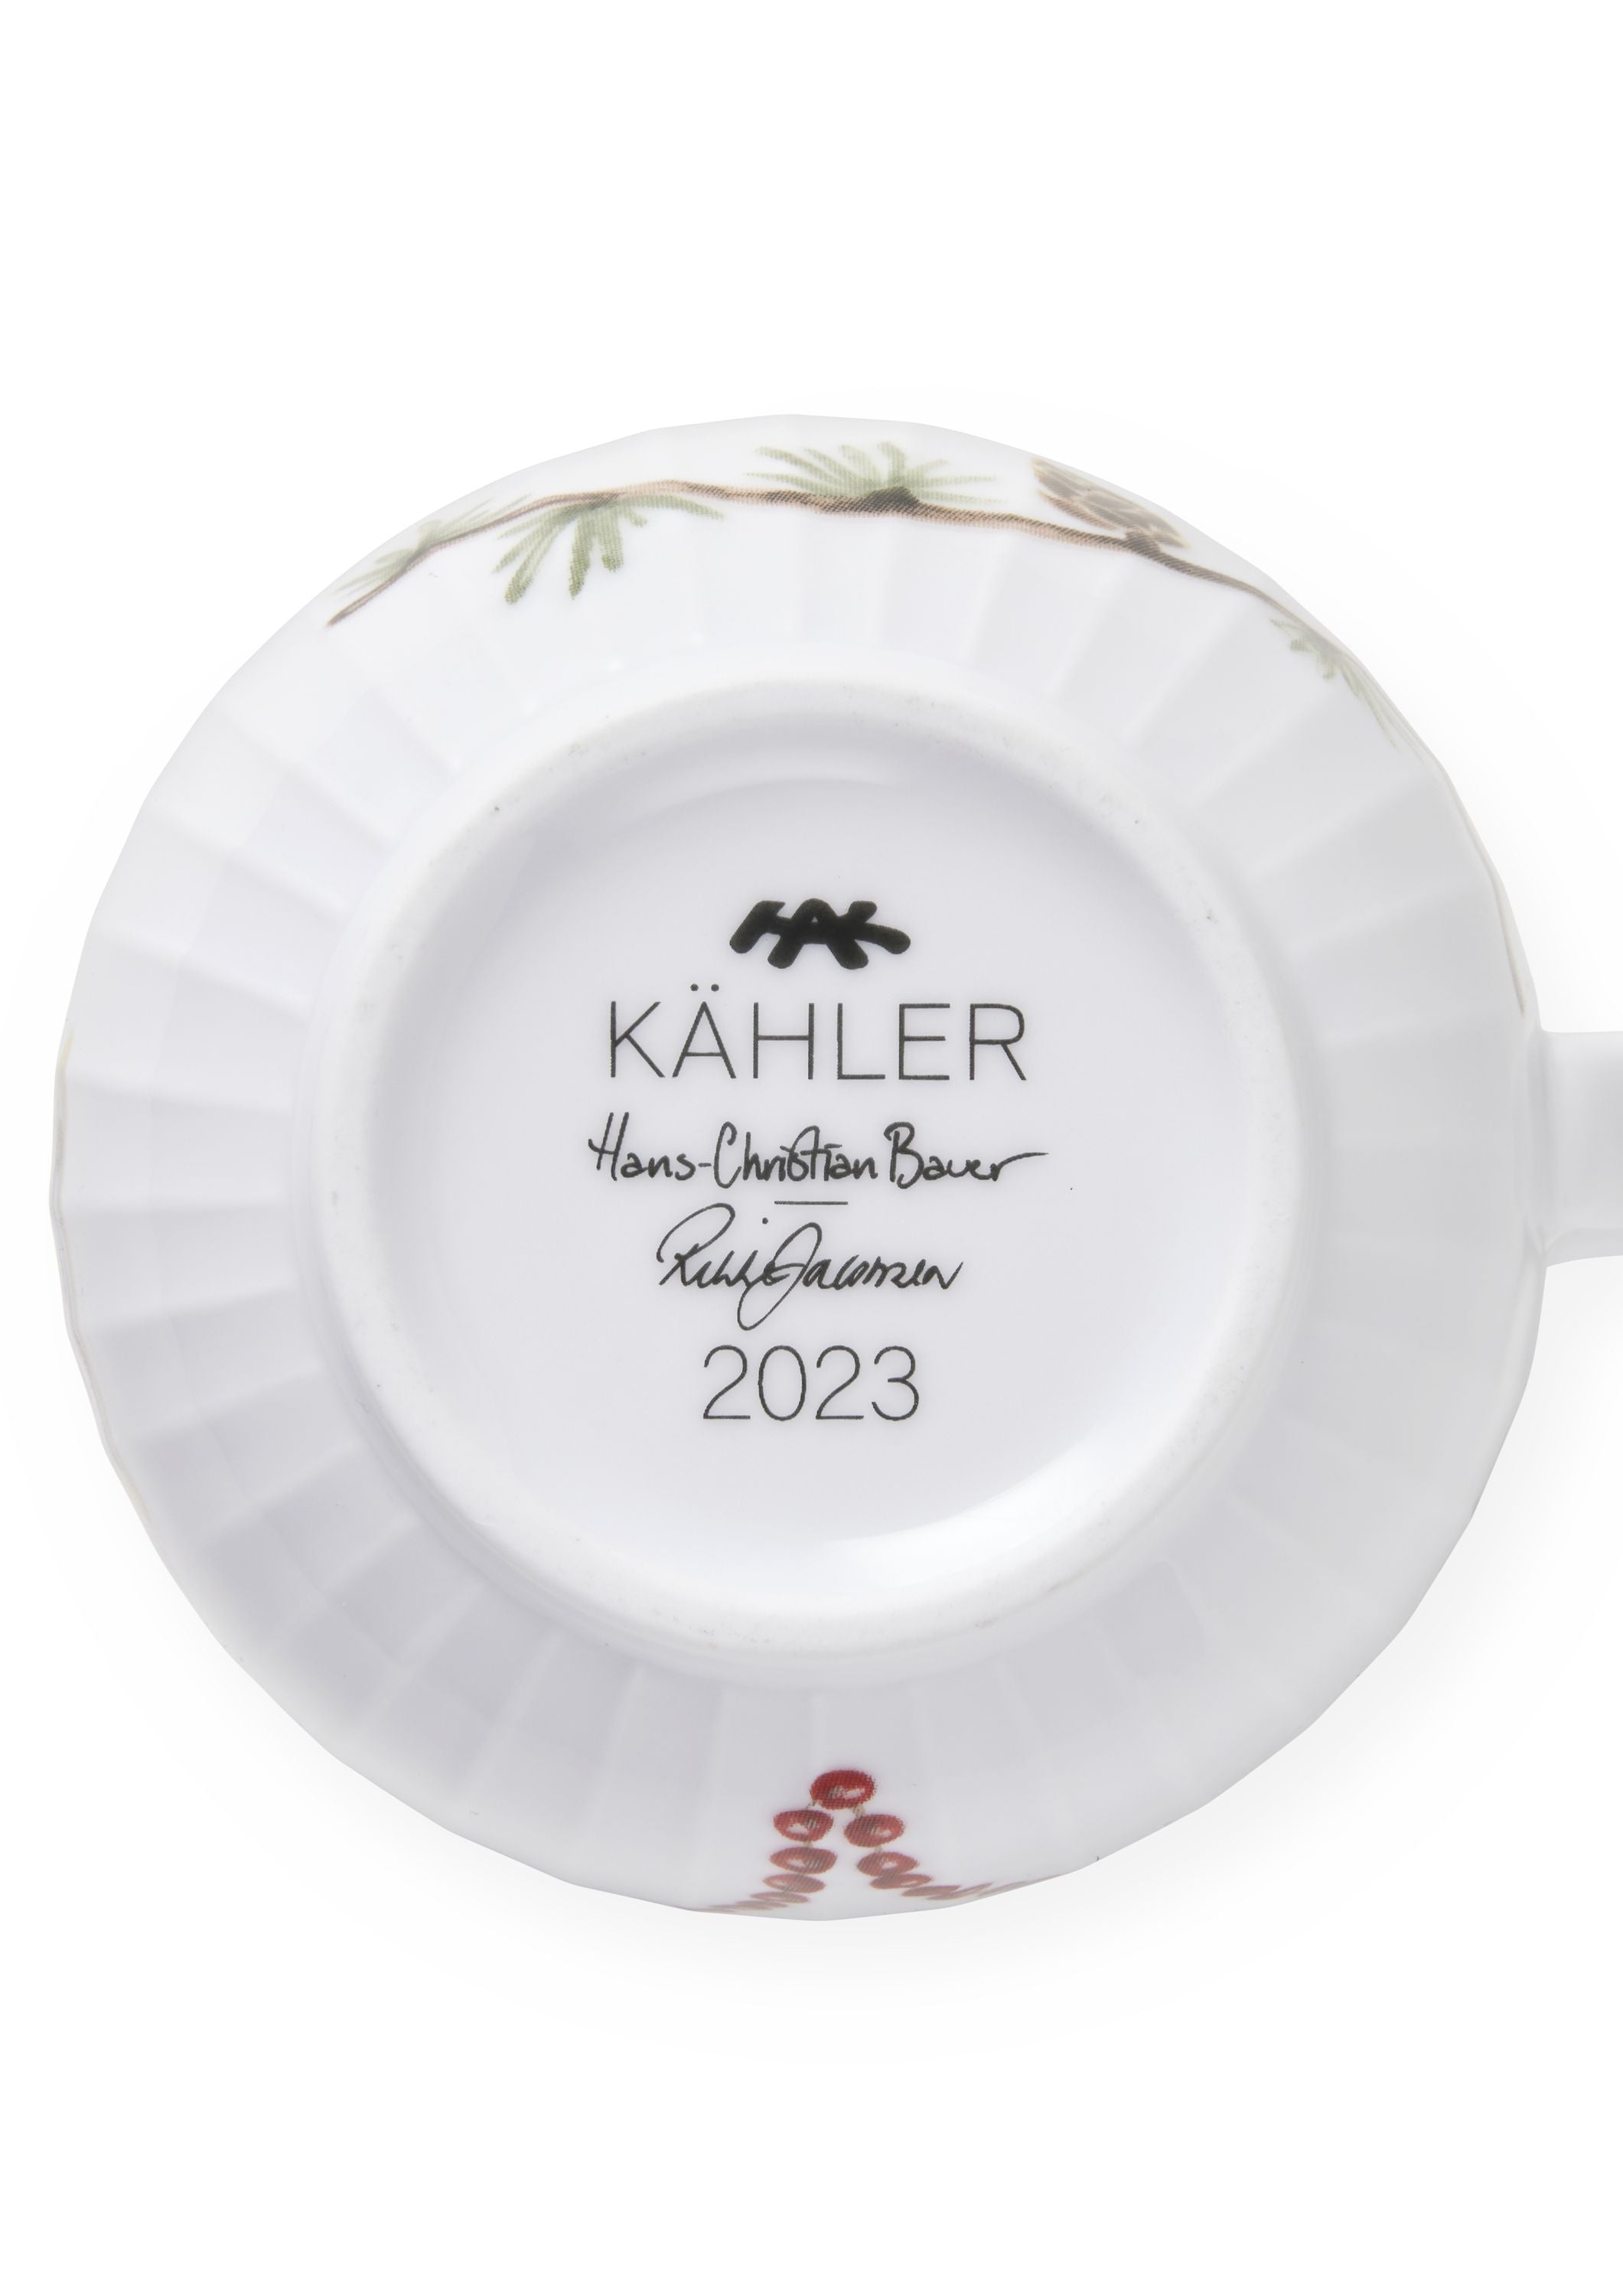 Taza de Navidad Kähler Hammershøi 2023 33 CL White W. Deco